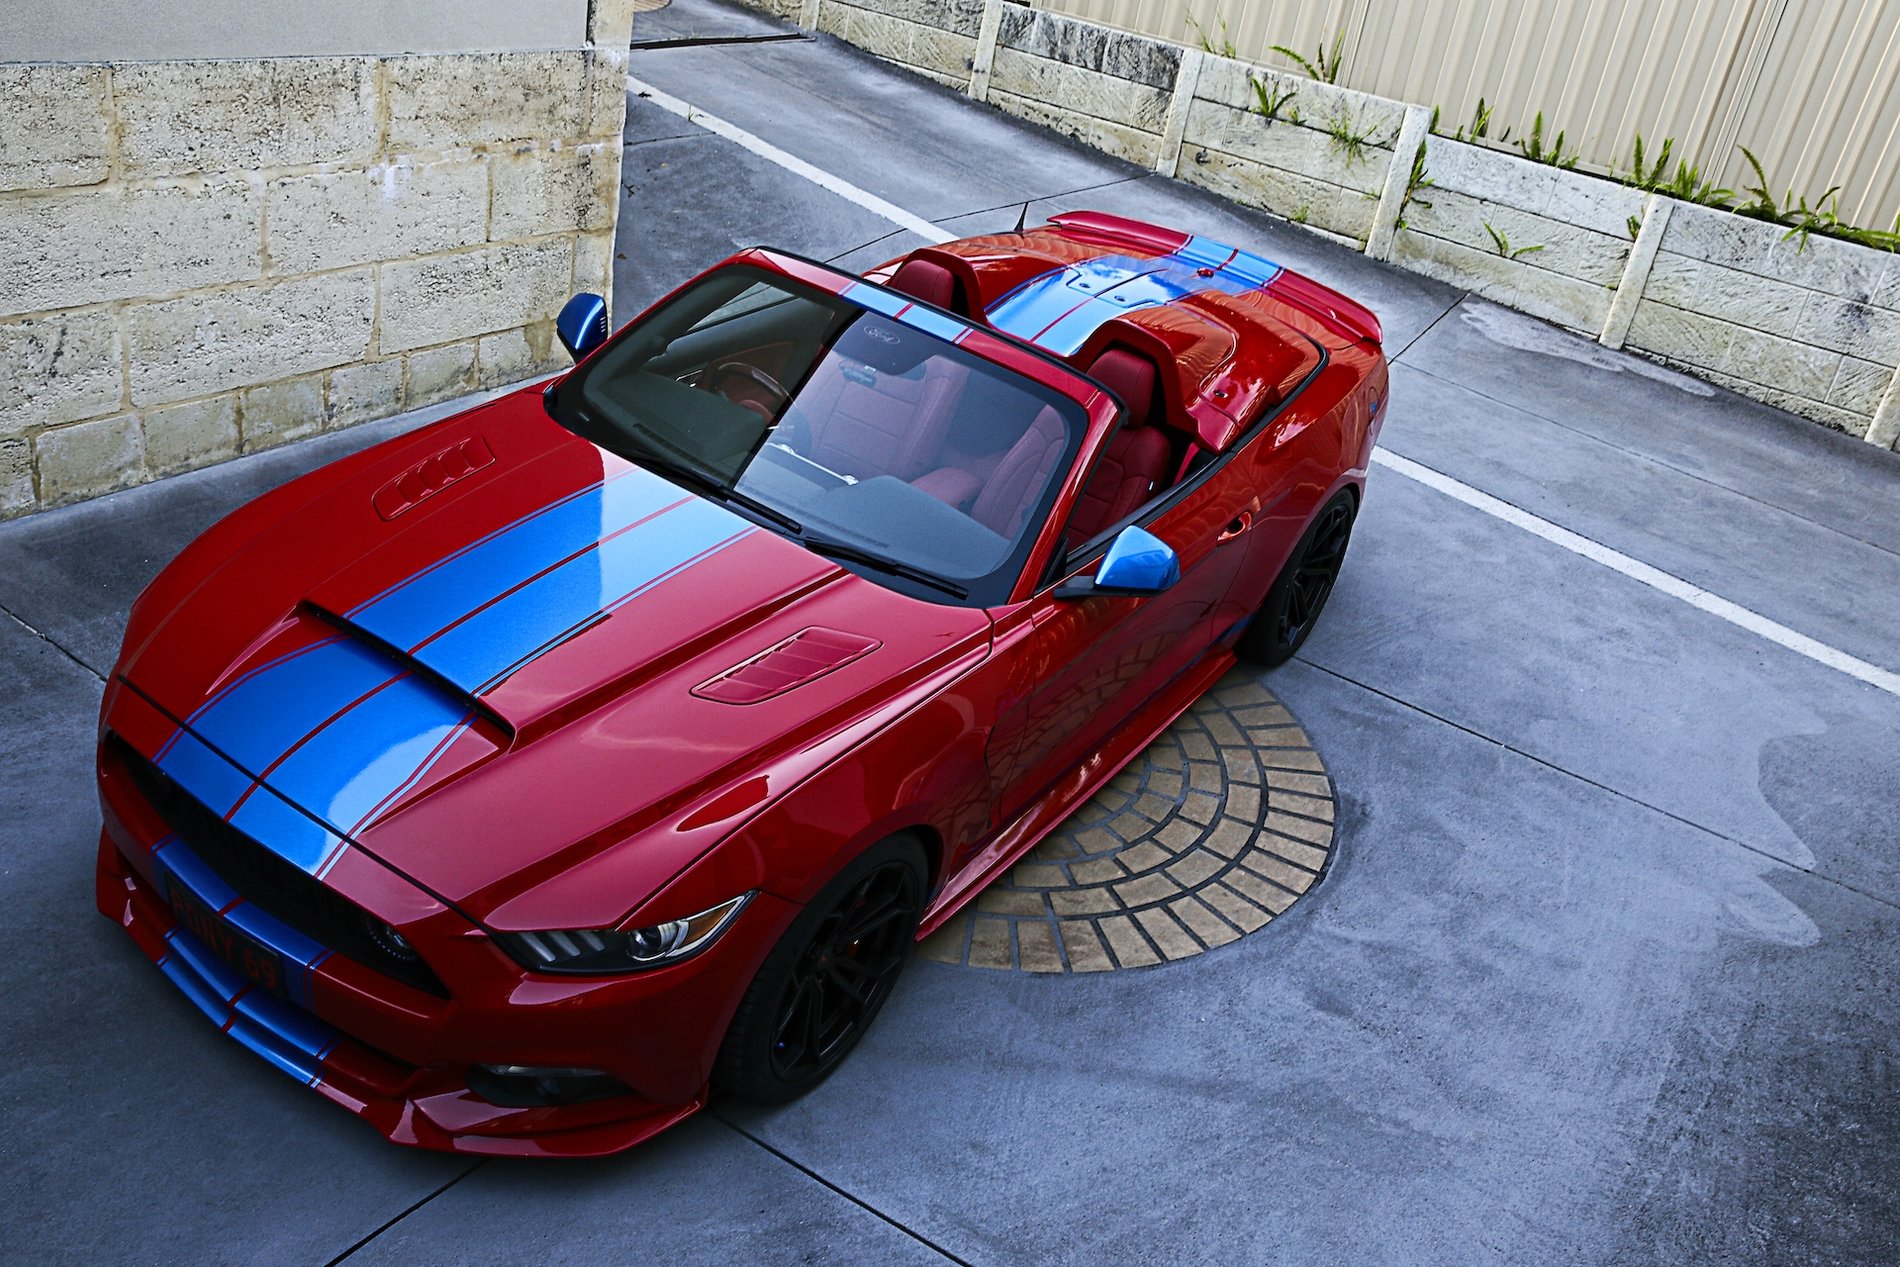 Fiberglass tonneau speedster style cover group buy? 2015+ S550 Mustang Forum (GT, EcoBoost